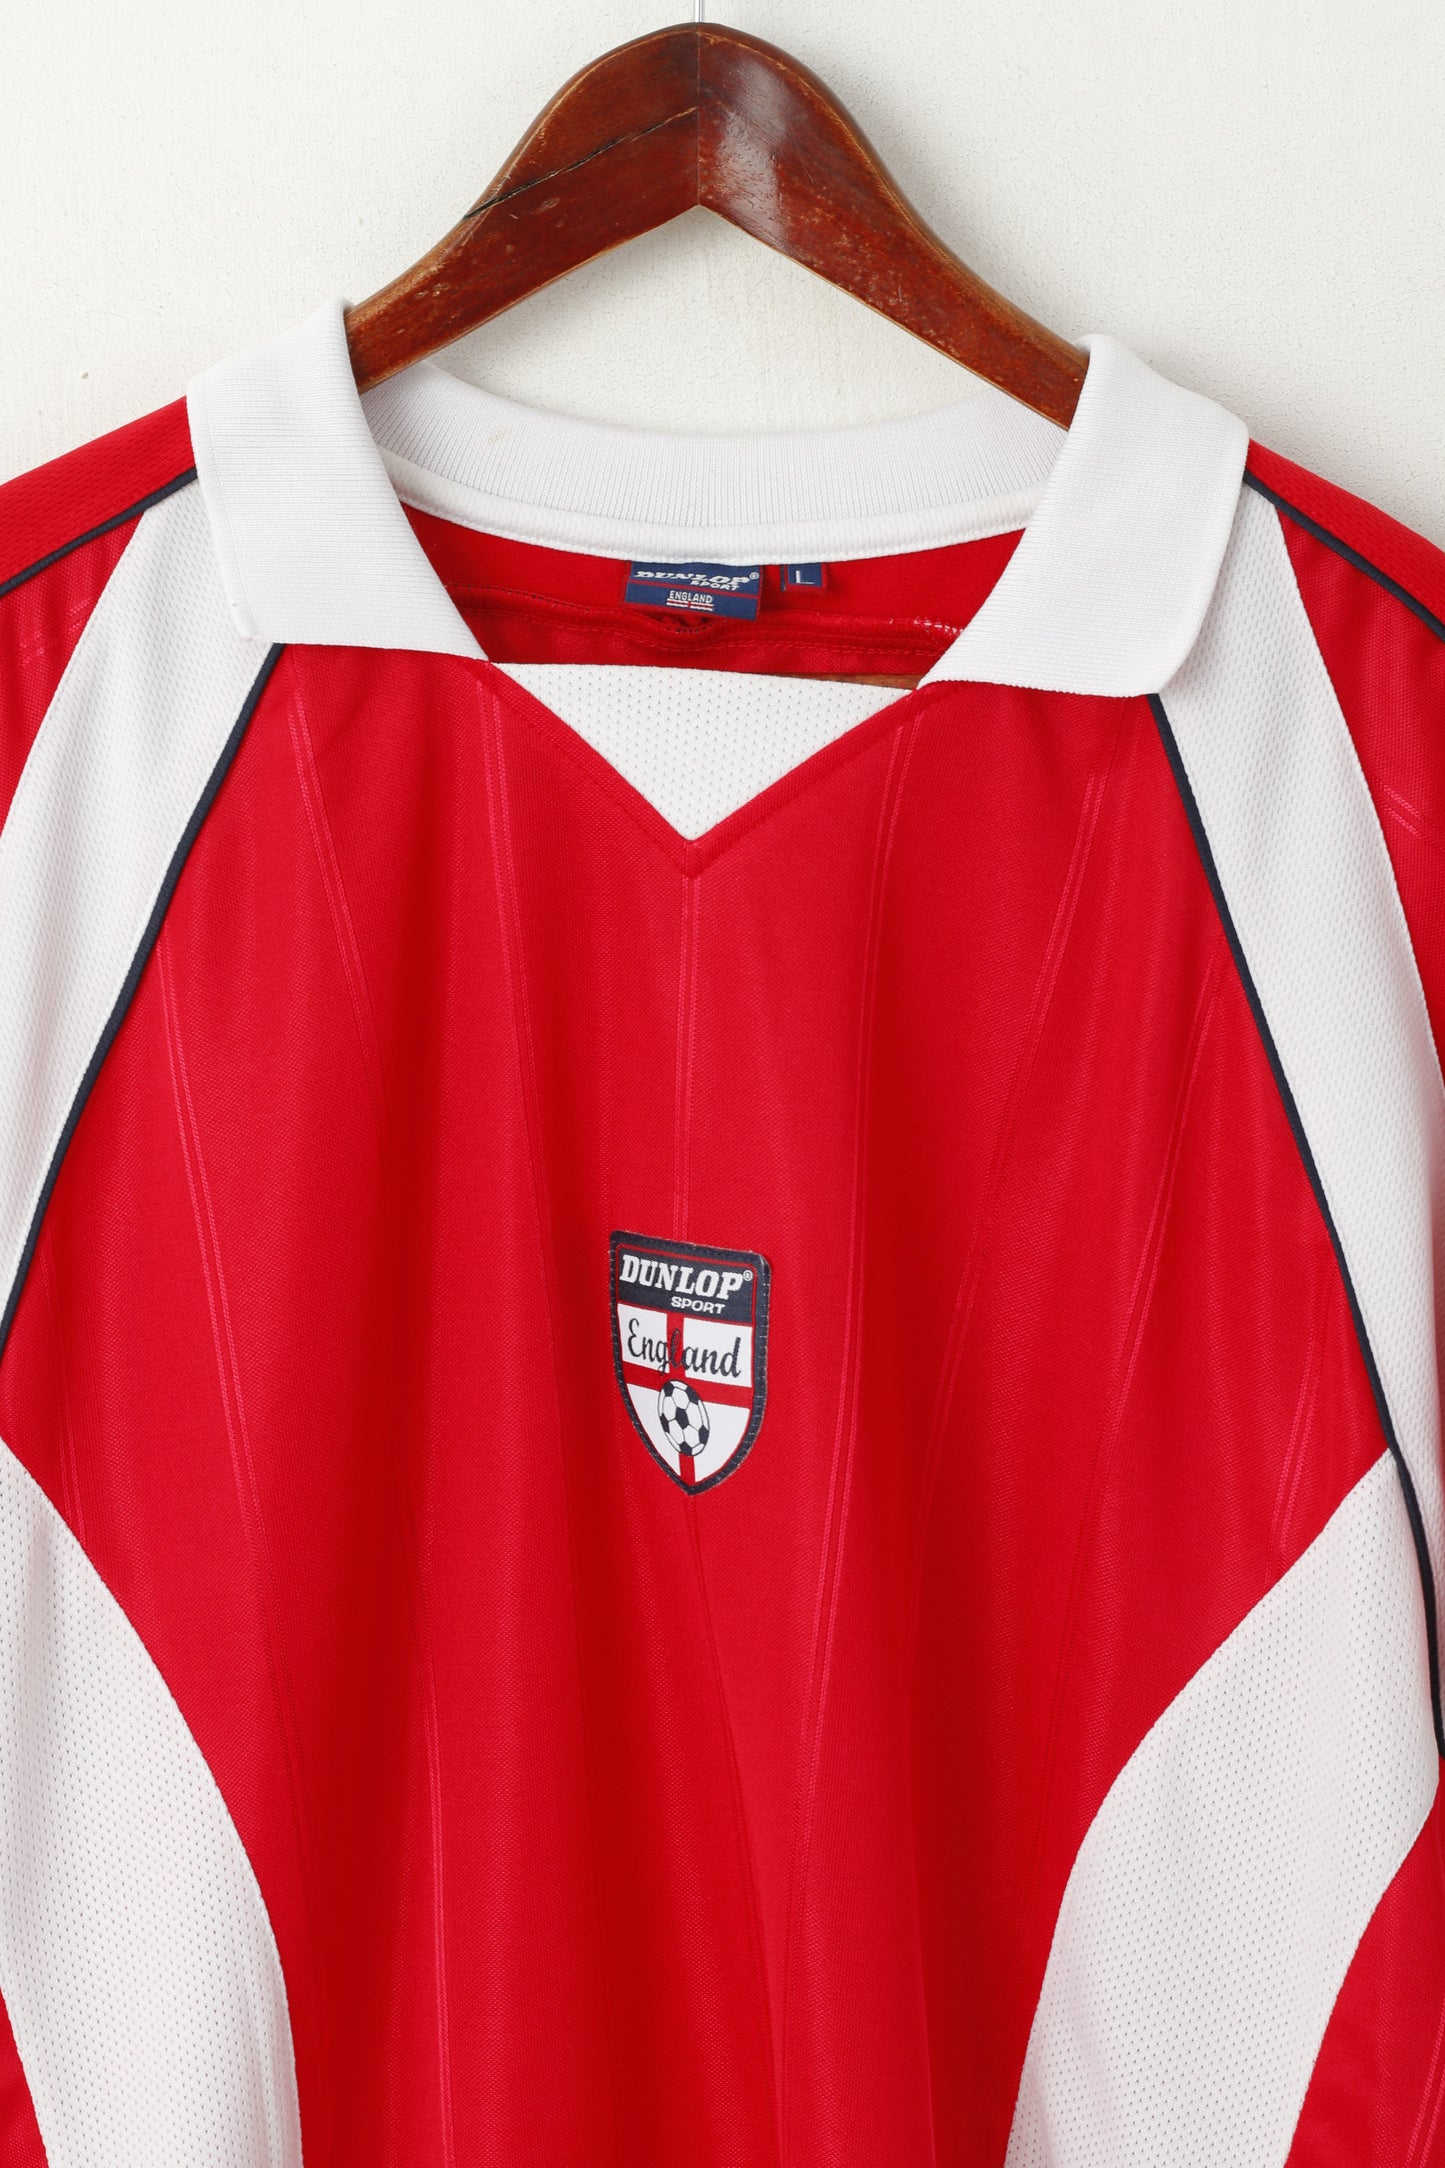 Dunlop Sport Men L Polo Shirt Red Shiny Vintage England Football Jersey Top